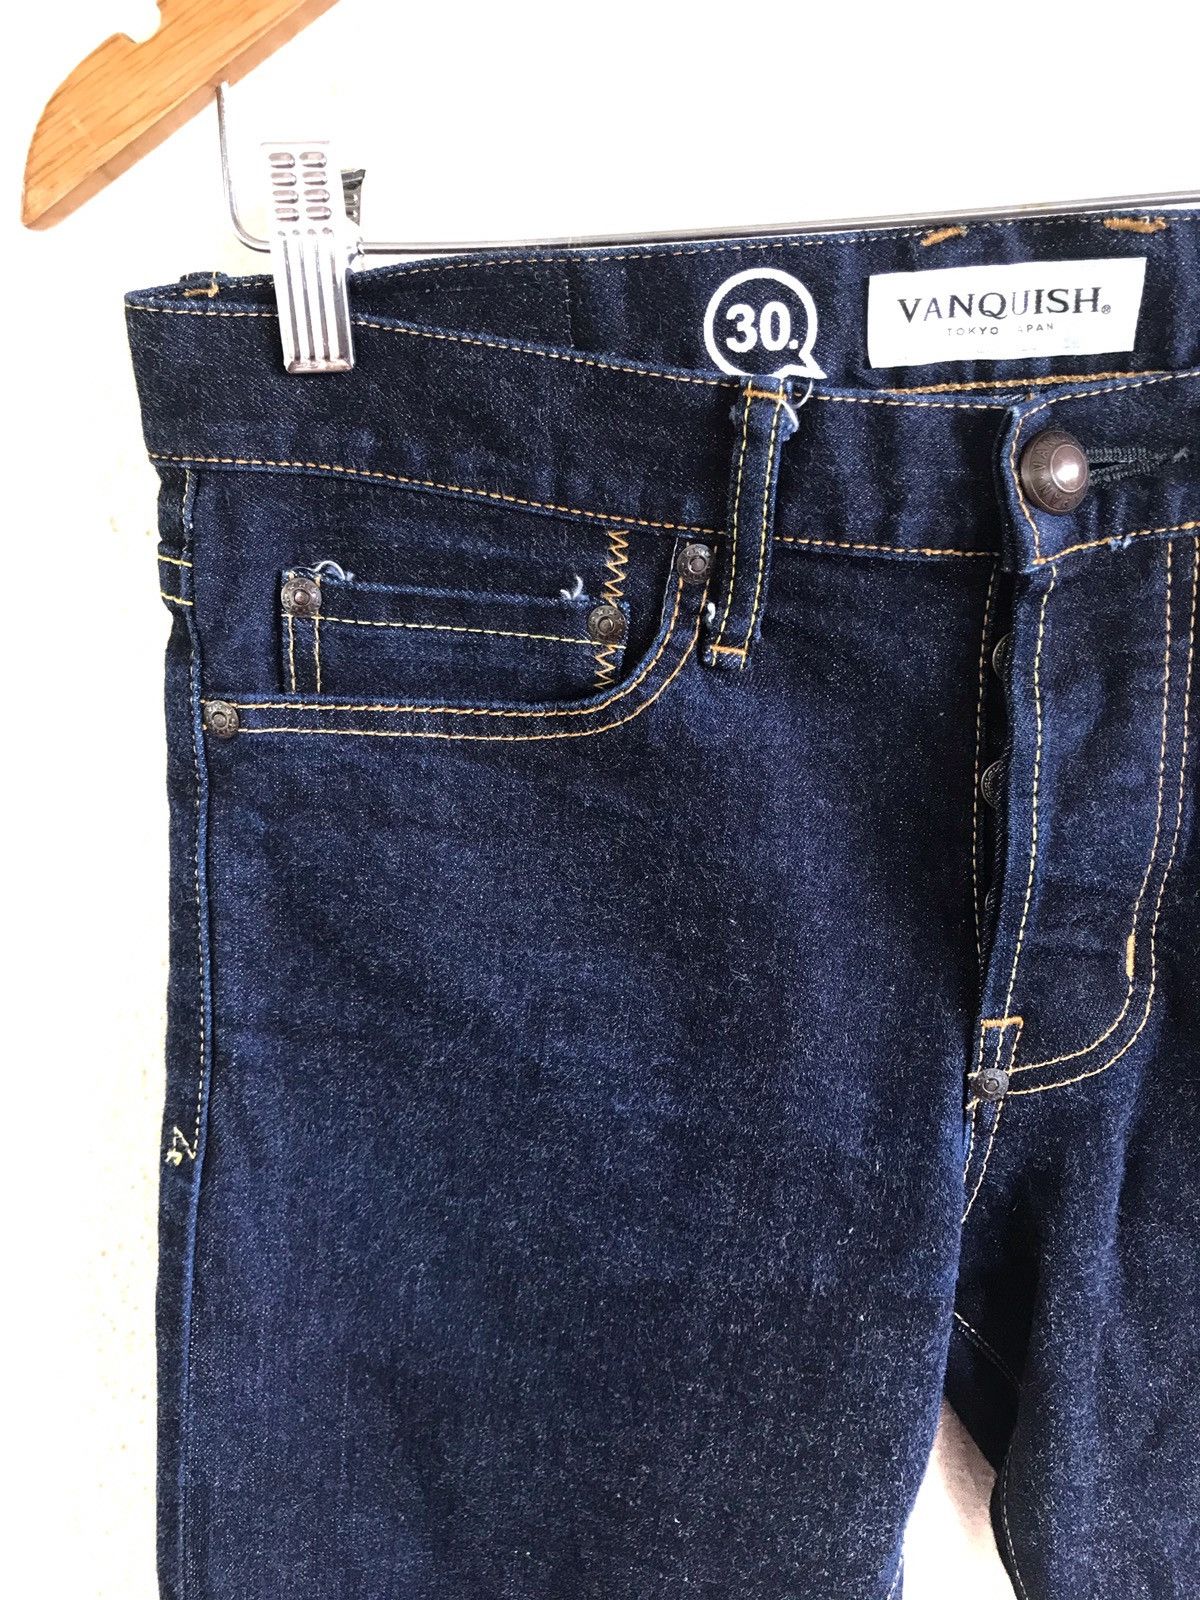 VANQUISH Japan Selvedge Skinny Jeans - 4